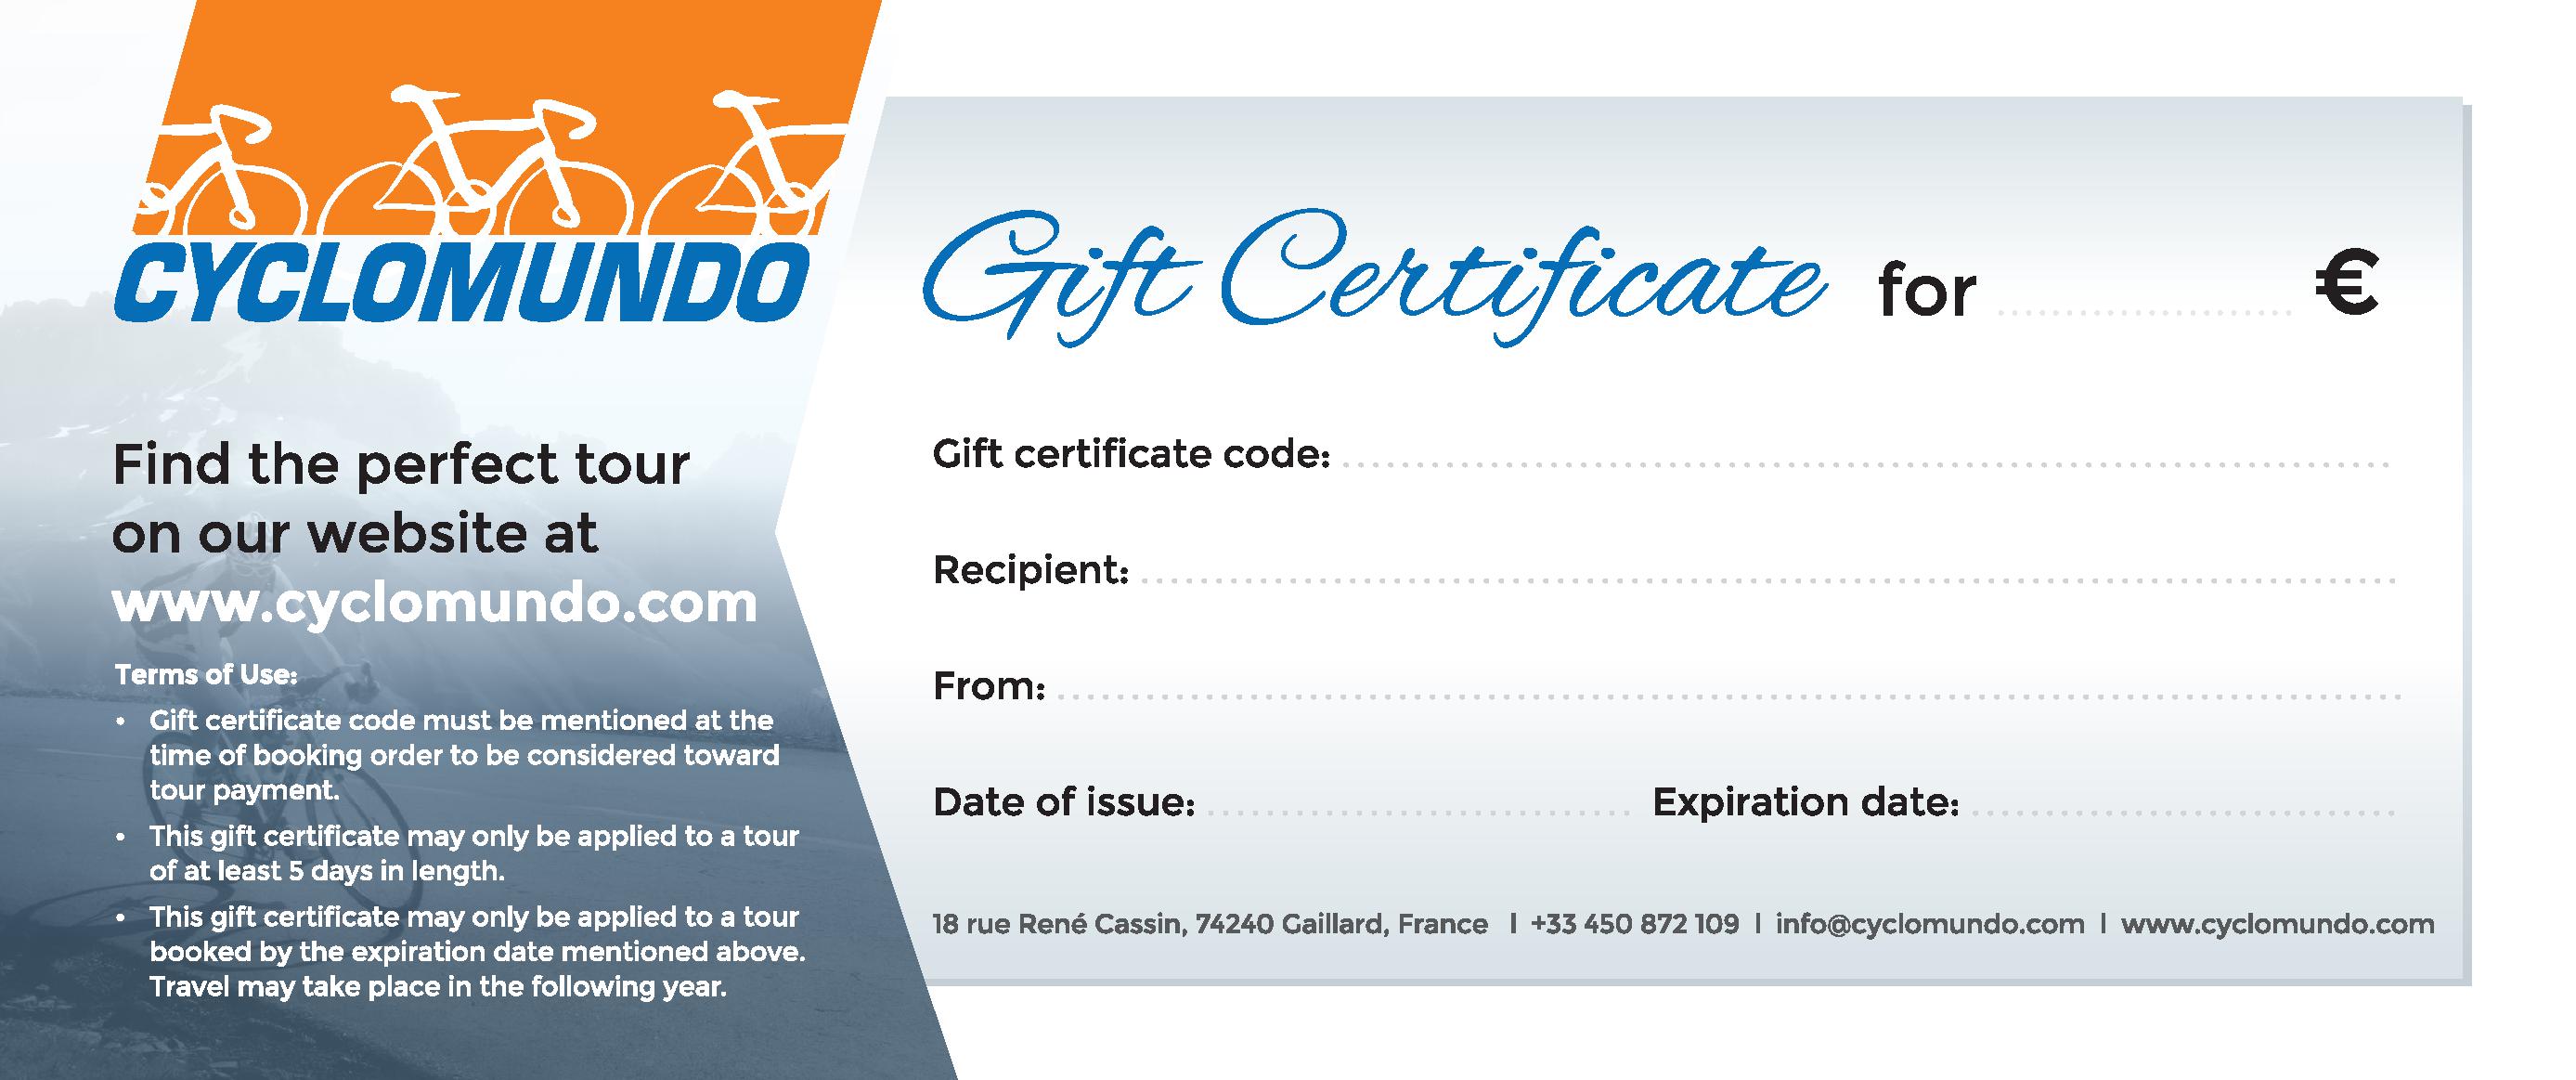 Cyclomundo Gift Certificate